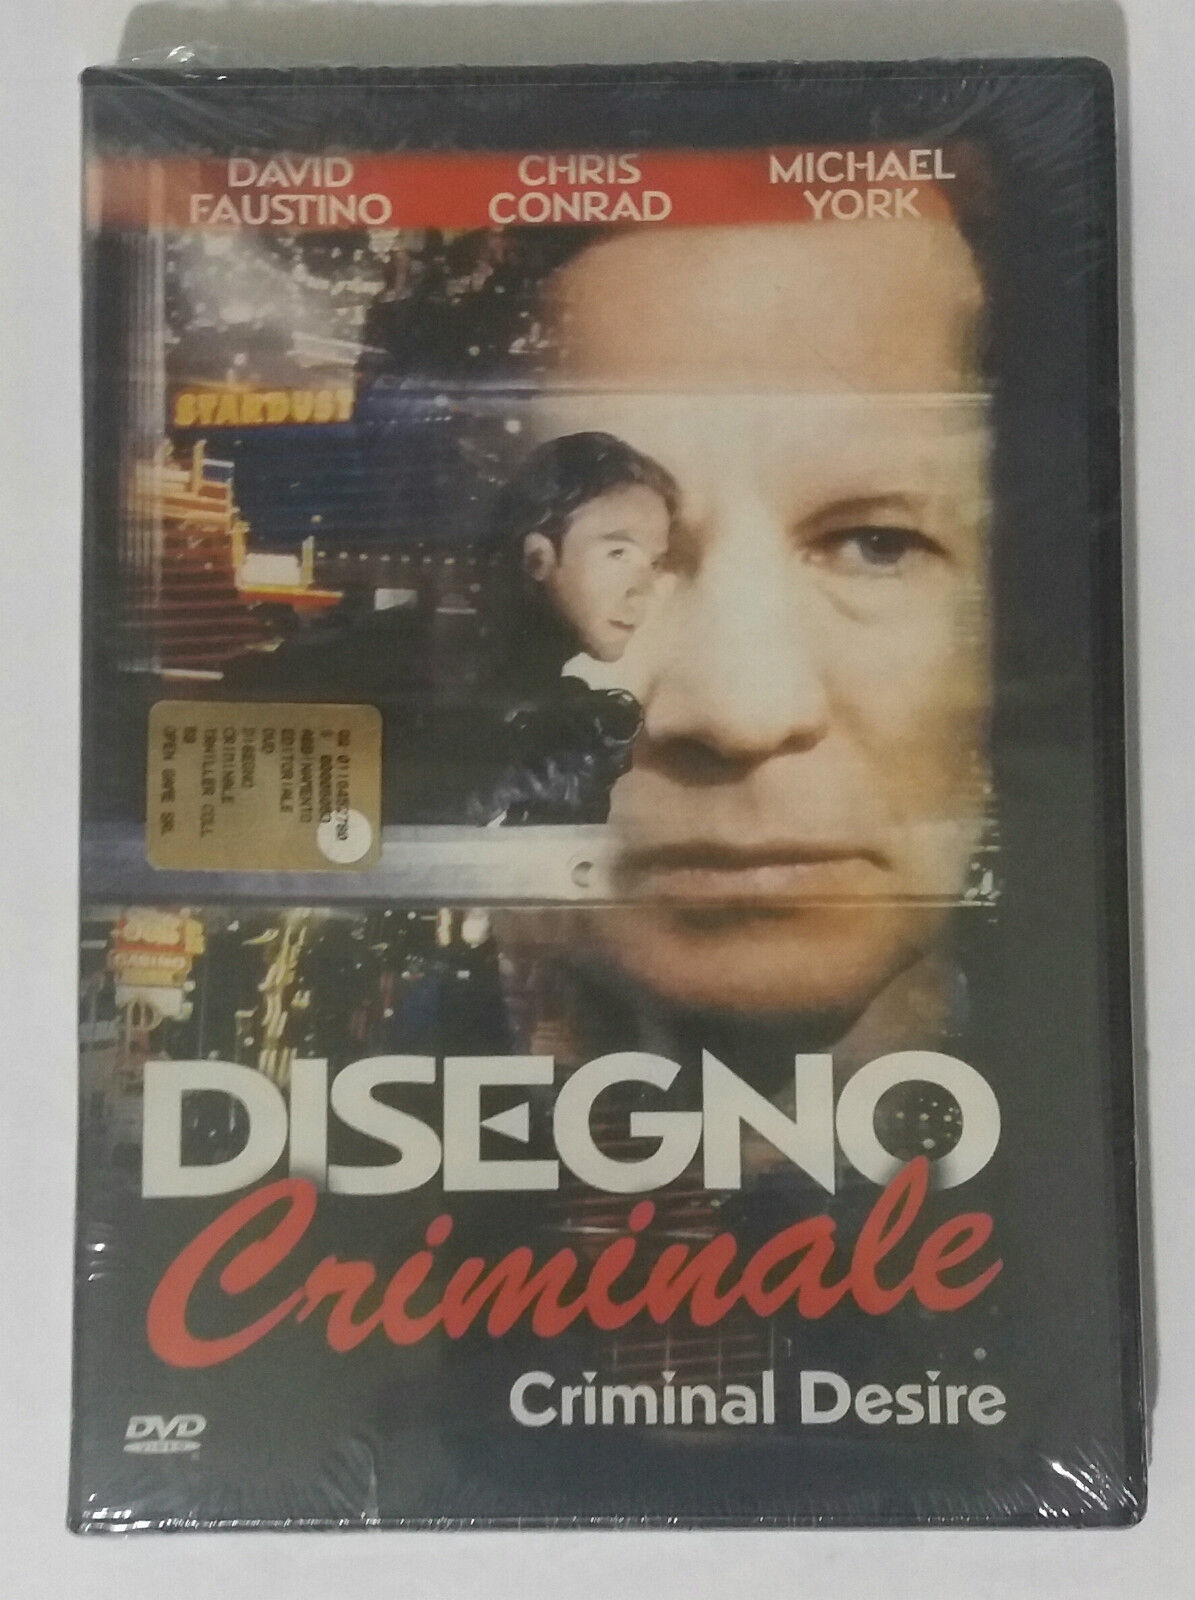 Disegno Criminale - Mark Freed - Open Game - 1998 - DVD - G dvd usato